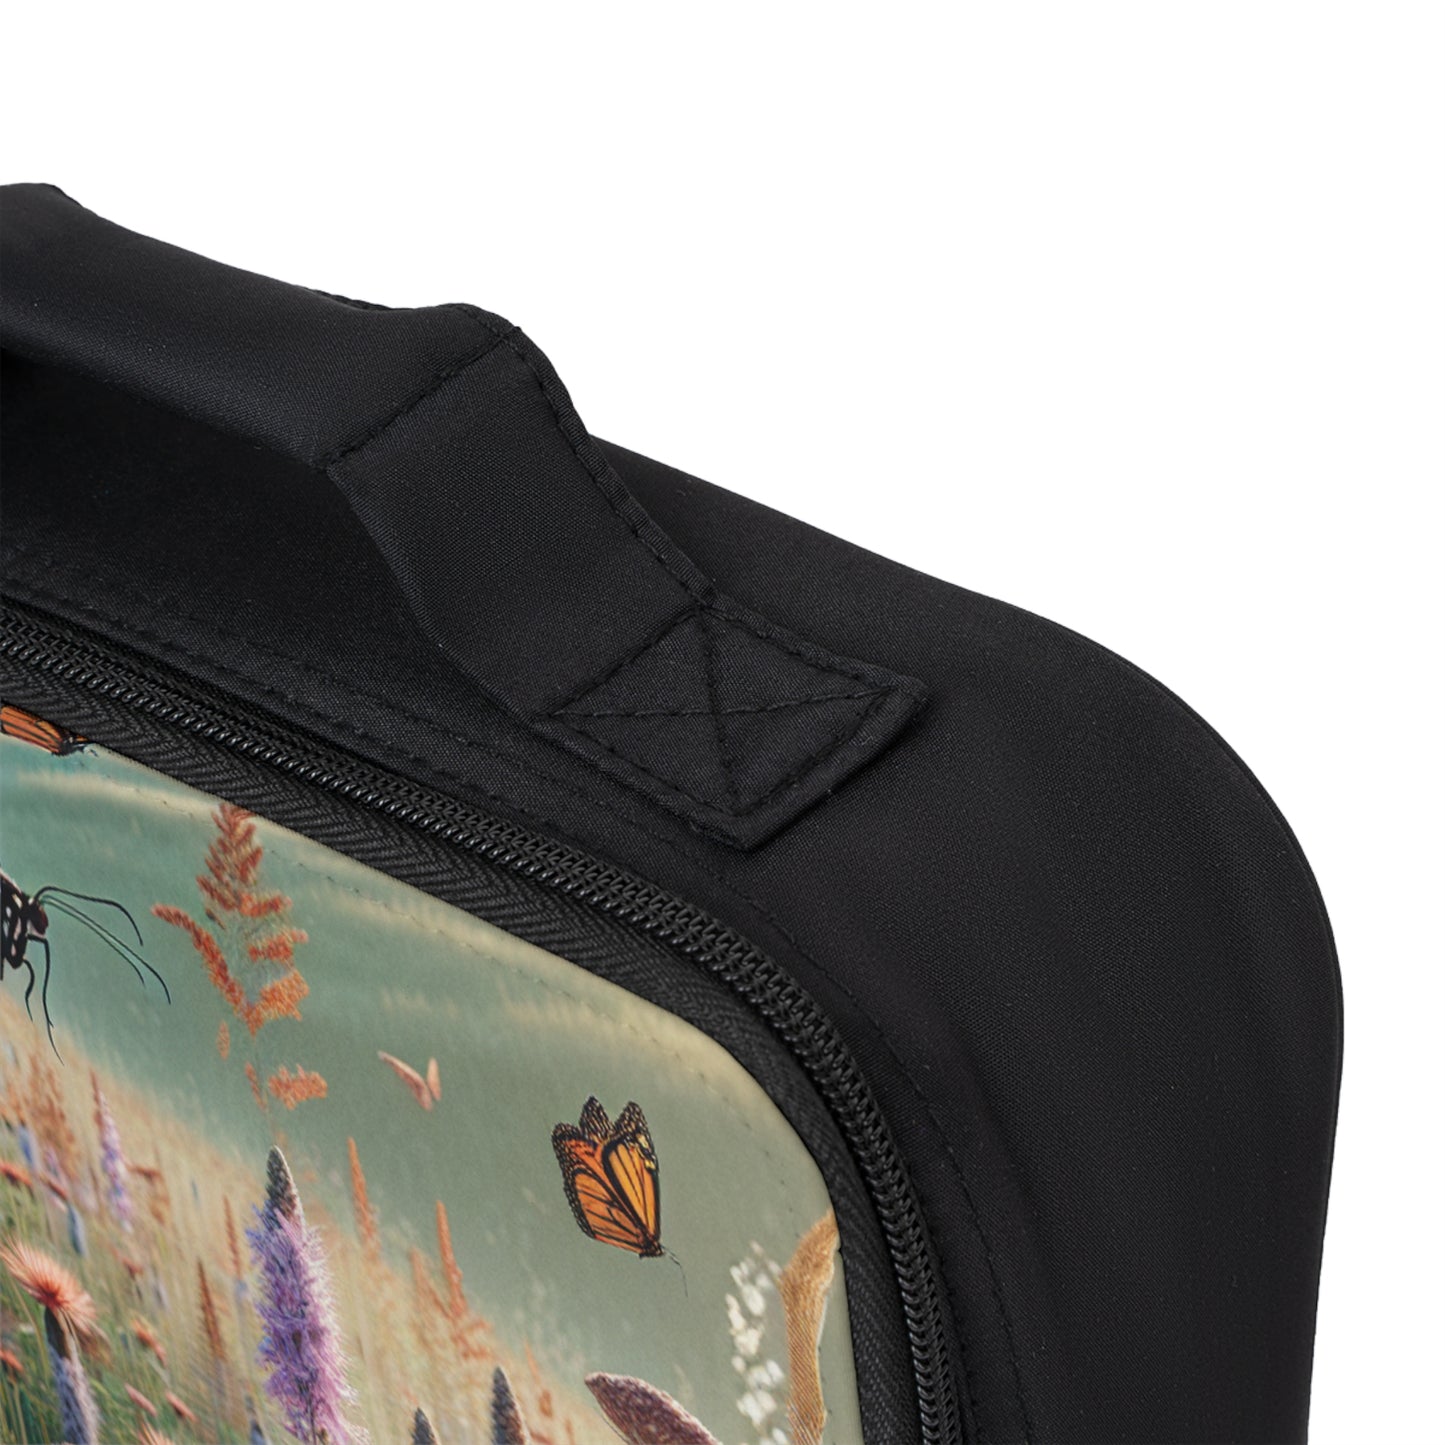 "A Monarch in Wildflower Meadow" - The Alien Lunch Bag Realism Style